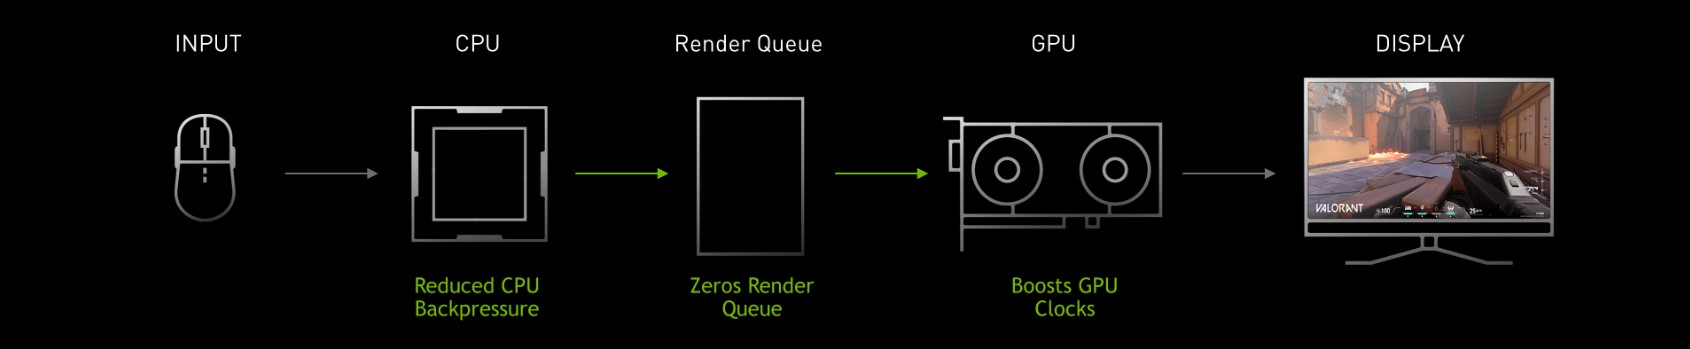 Как работает NVIDIA Reflex Low Latency